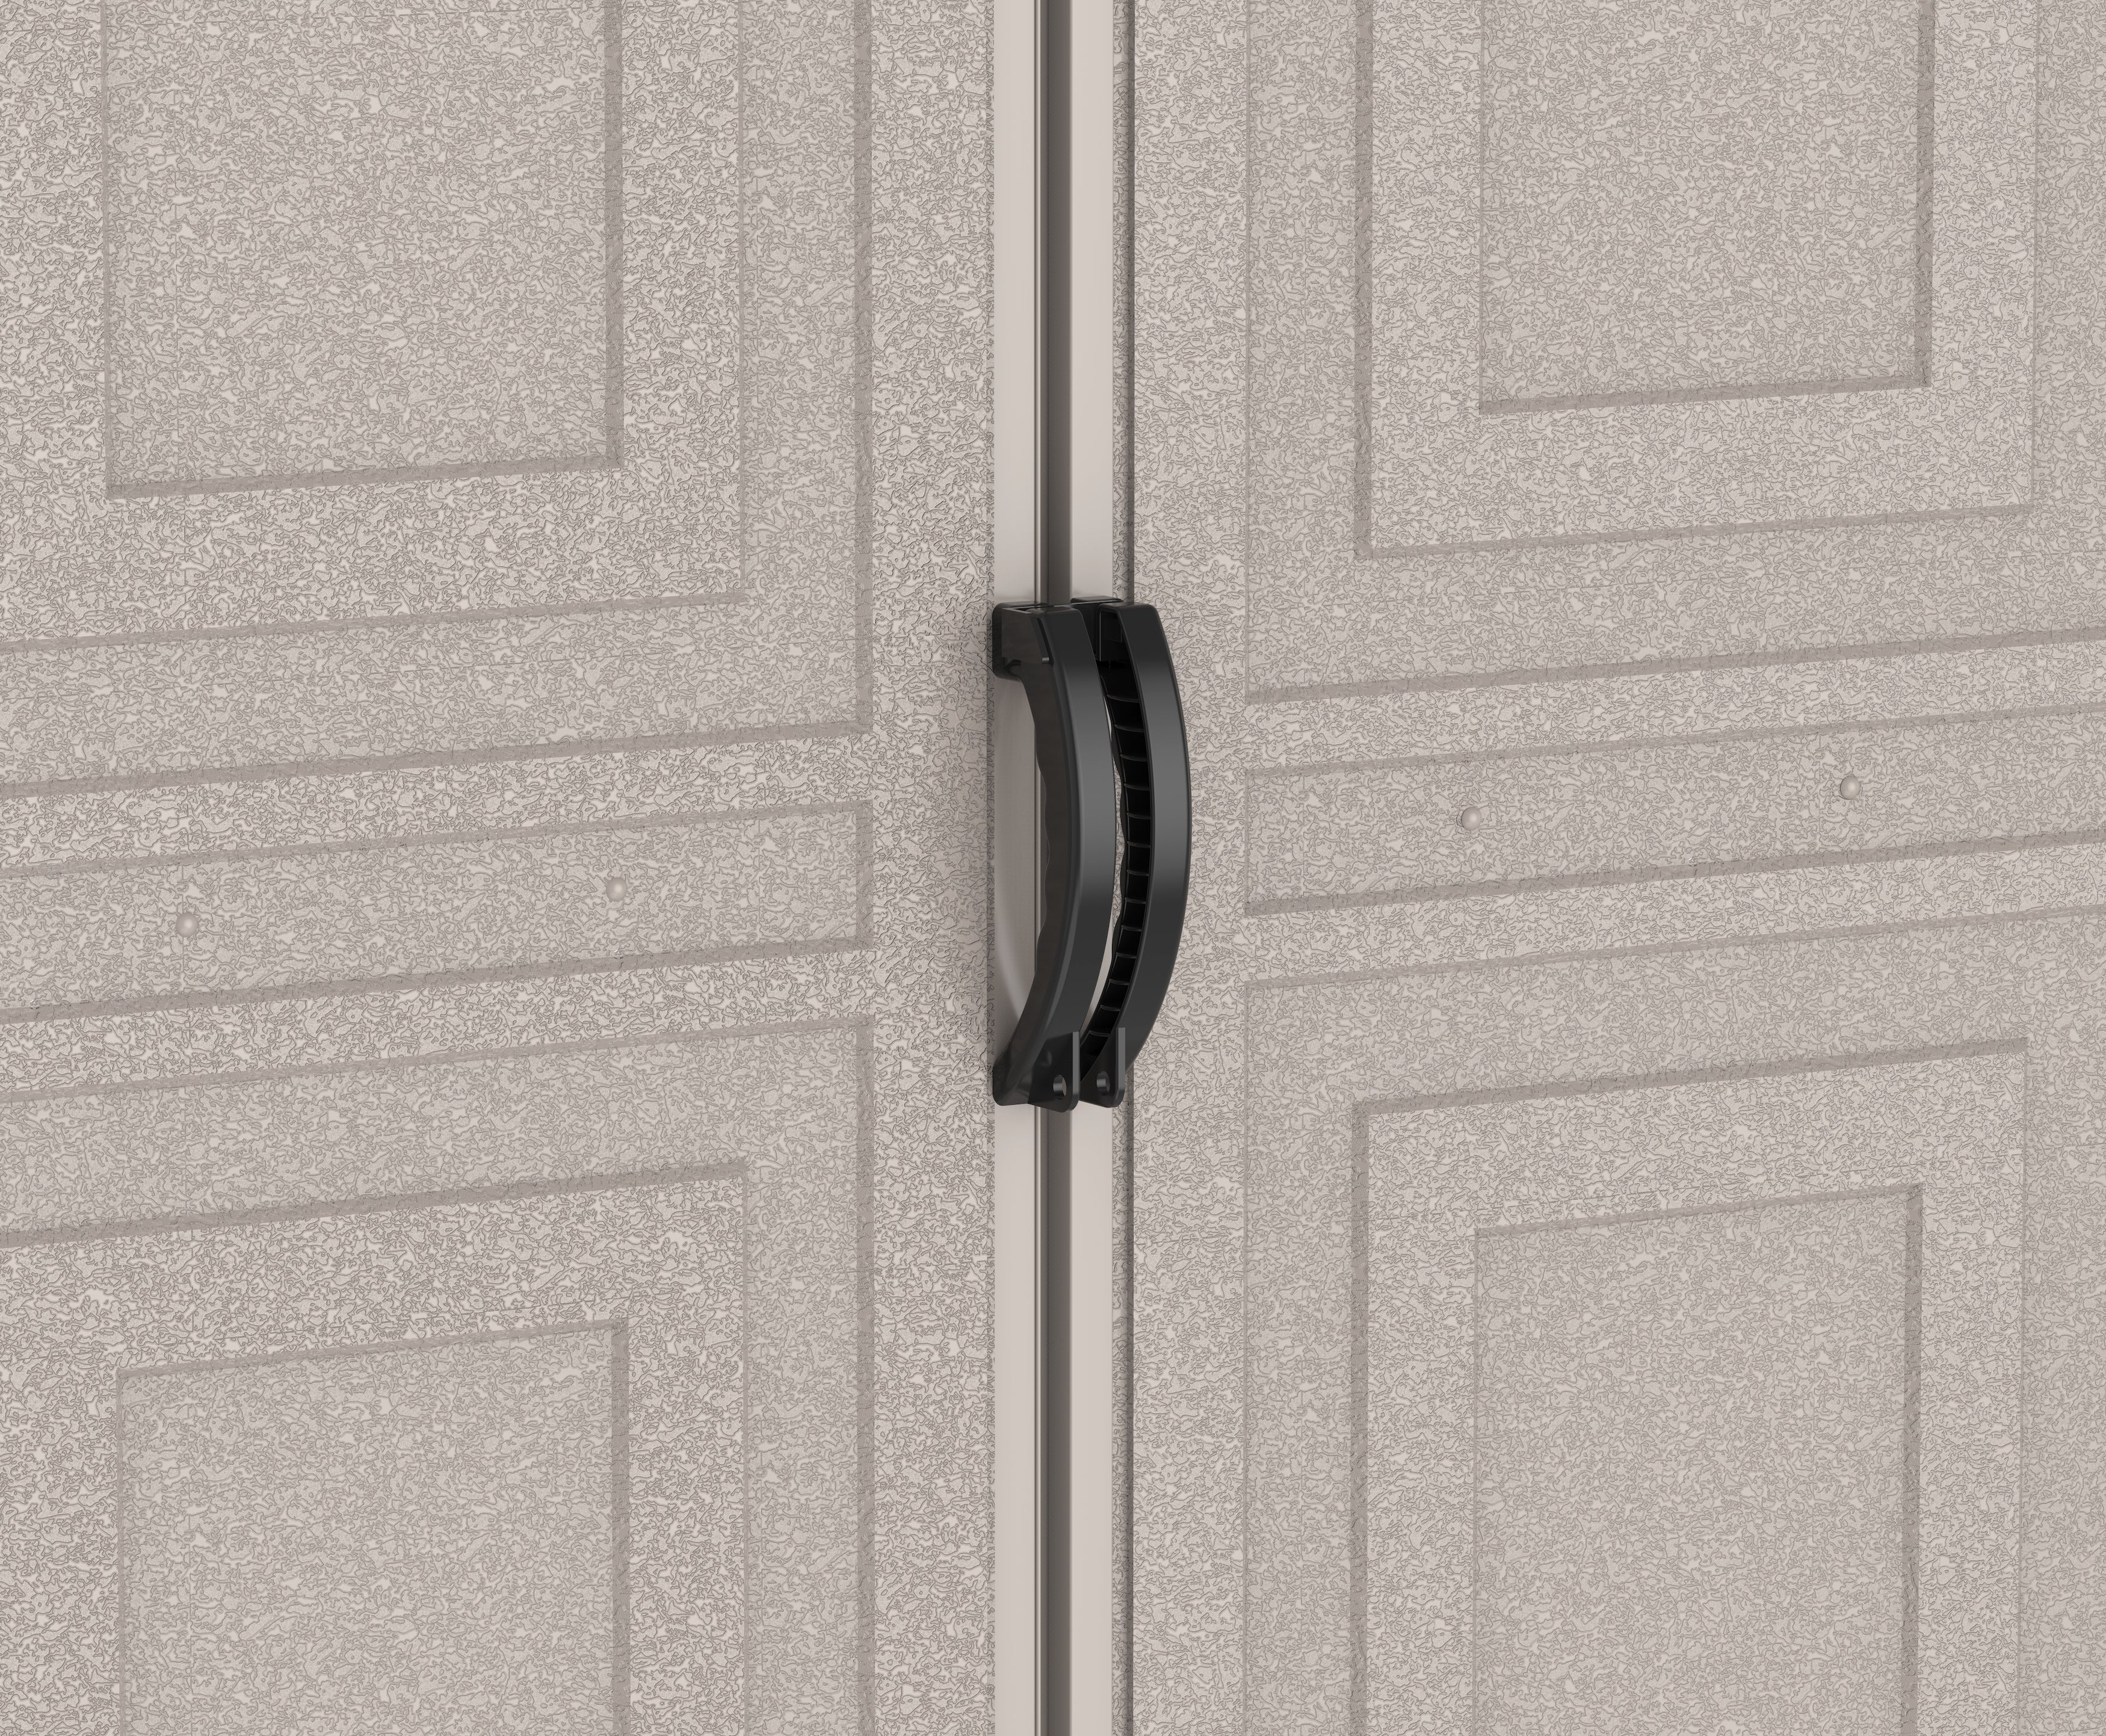 Duramax Vinyl Garage 10.5x28.5 w/ Foundation 2 Windows 15526 close up of outside door handles